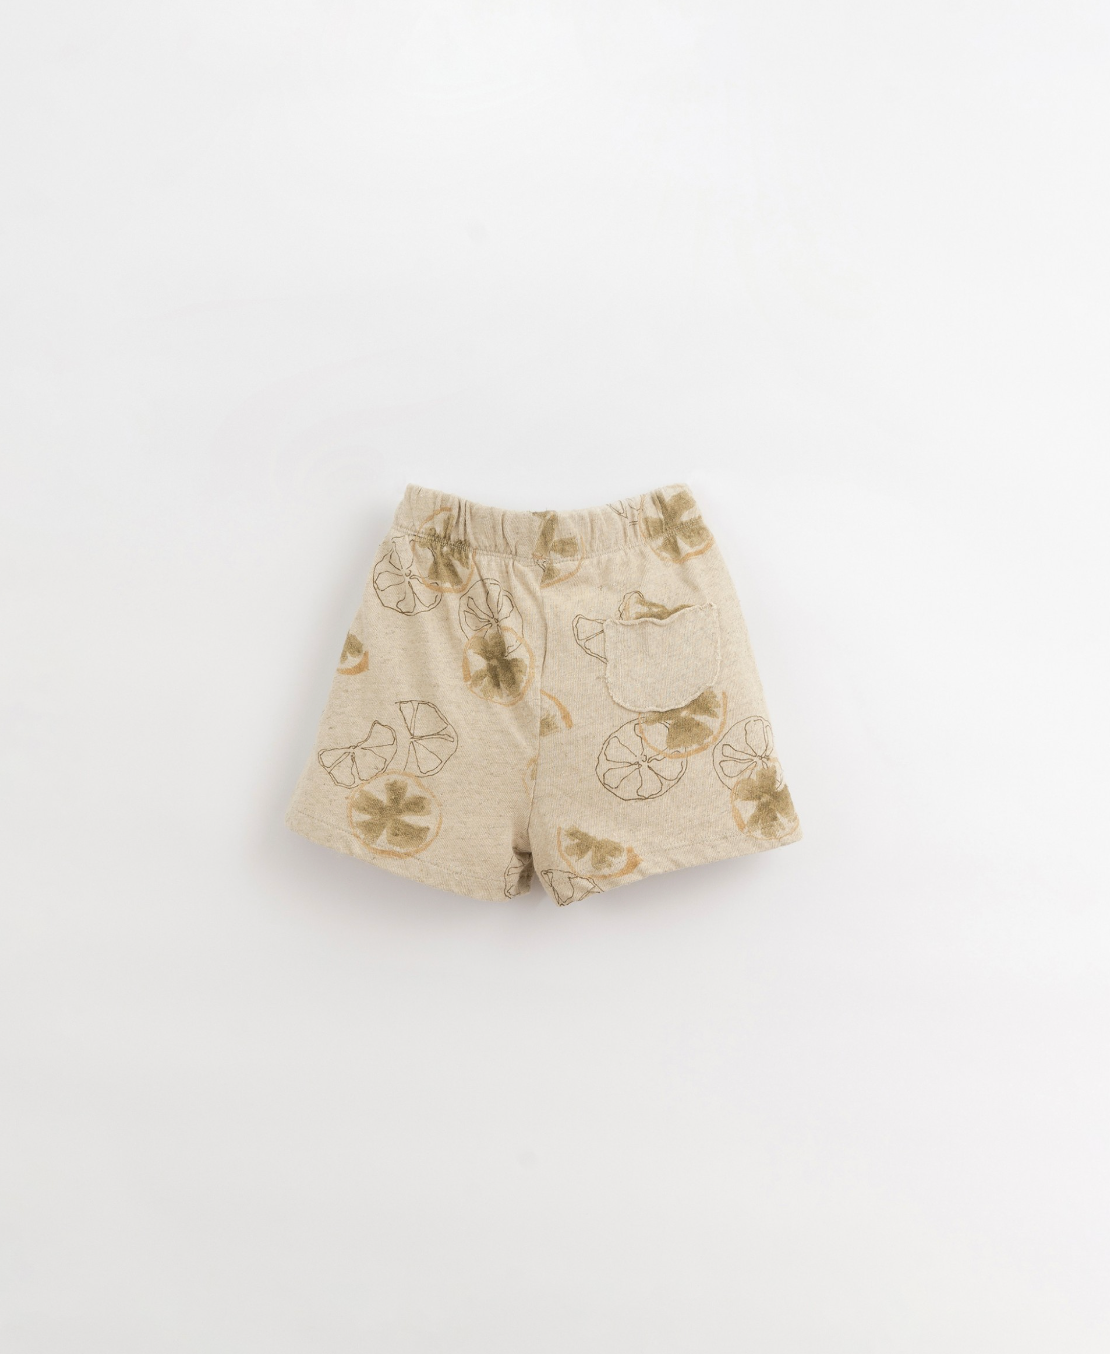 Jersey stitch shorts with citrus print